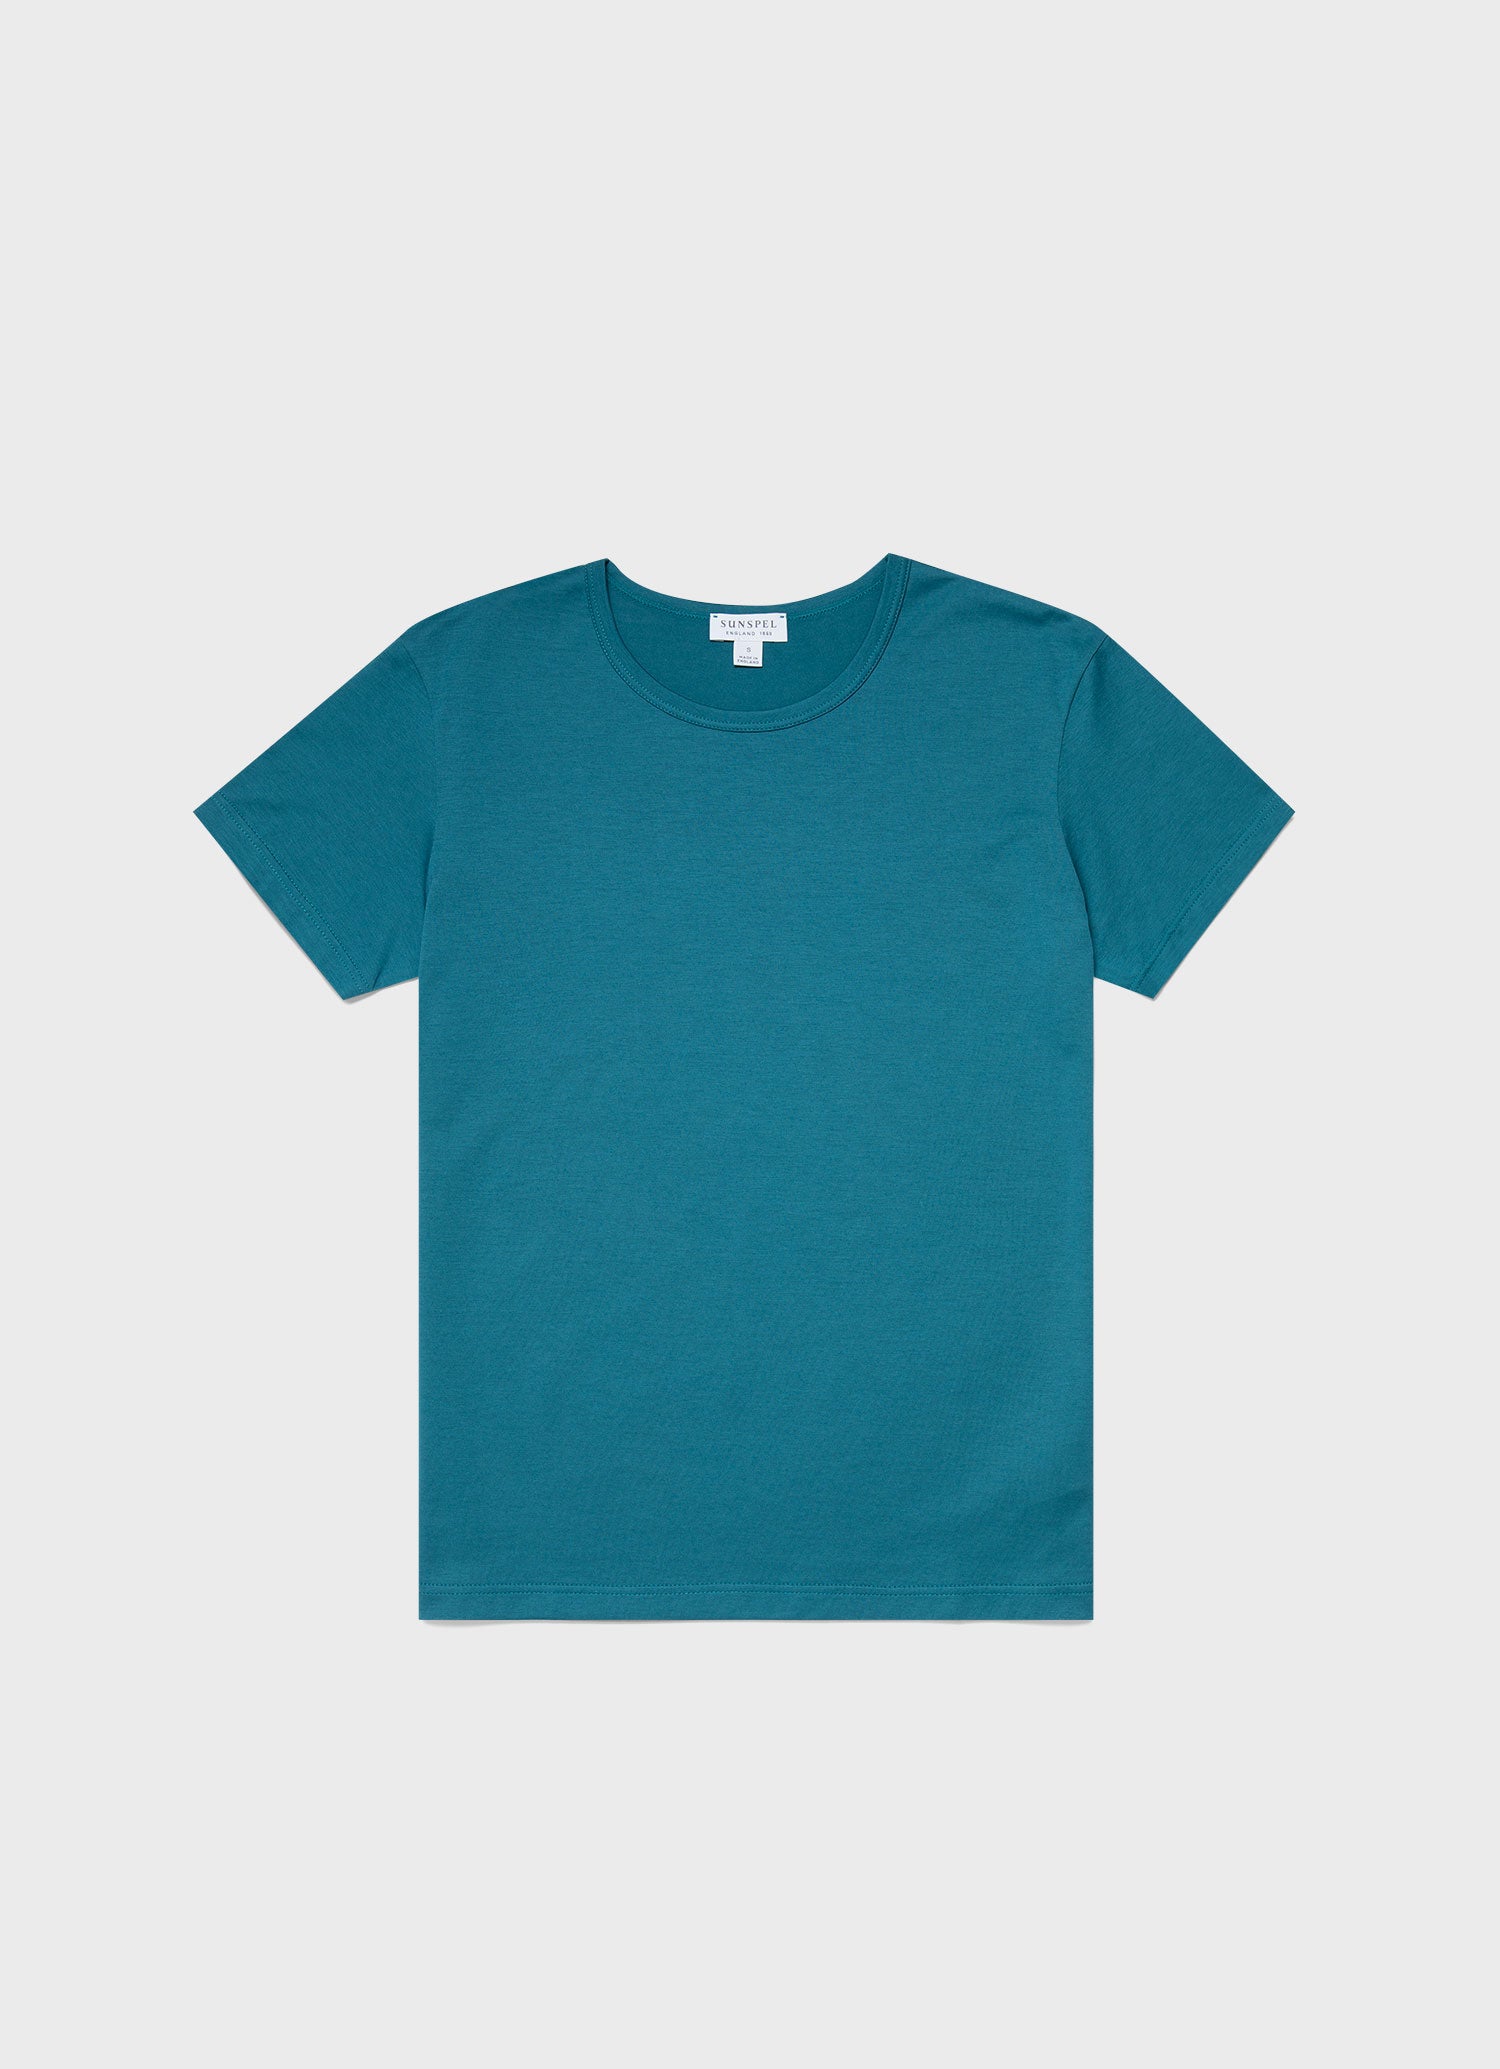 Women's Classic T-shirt in Lagoon Blue